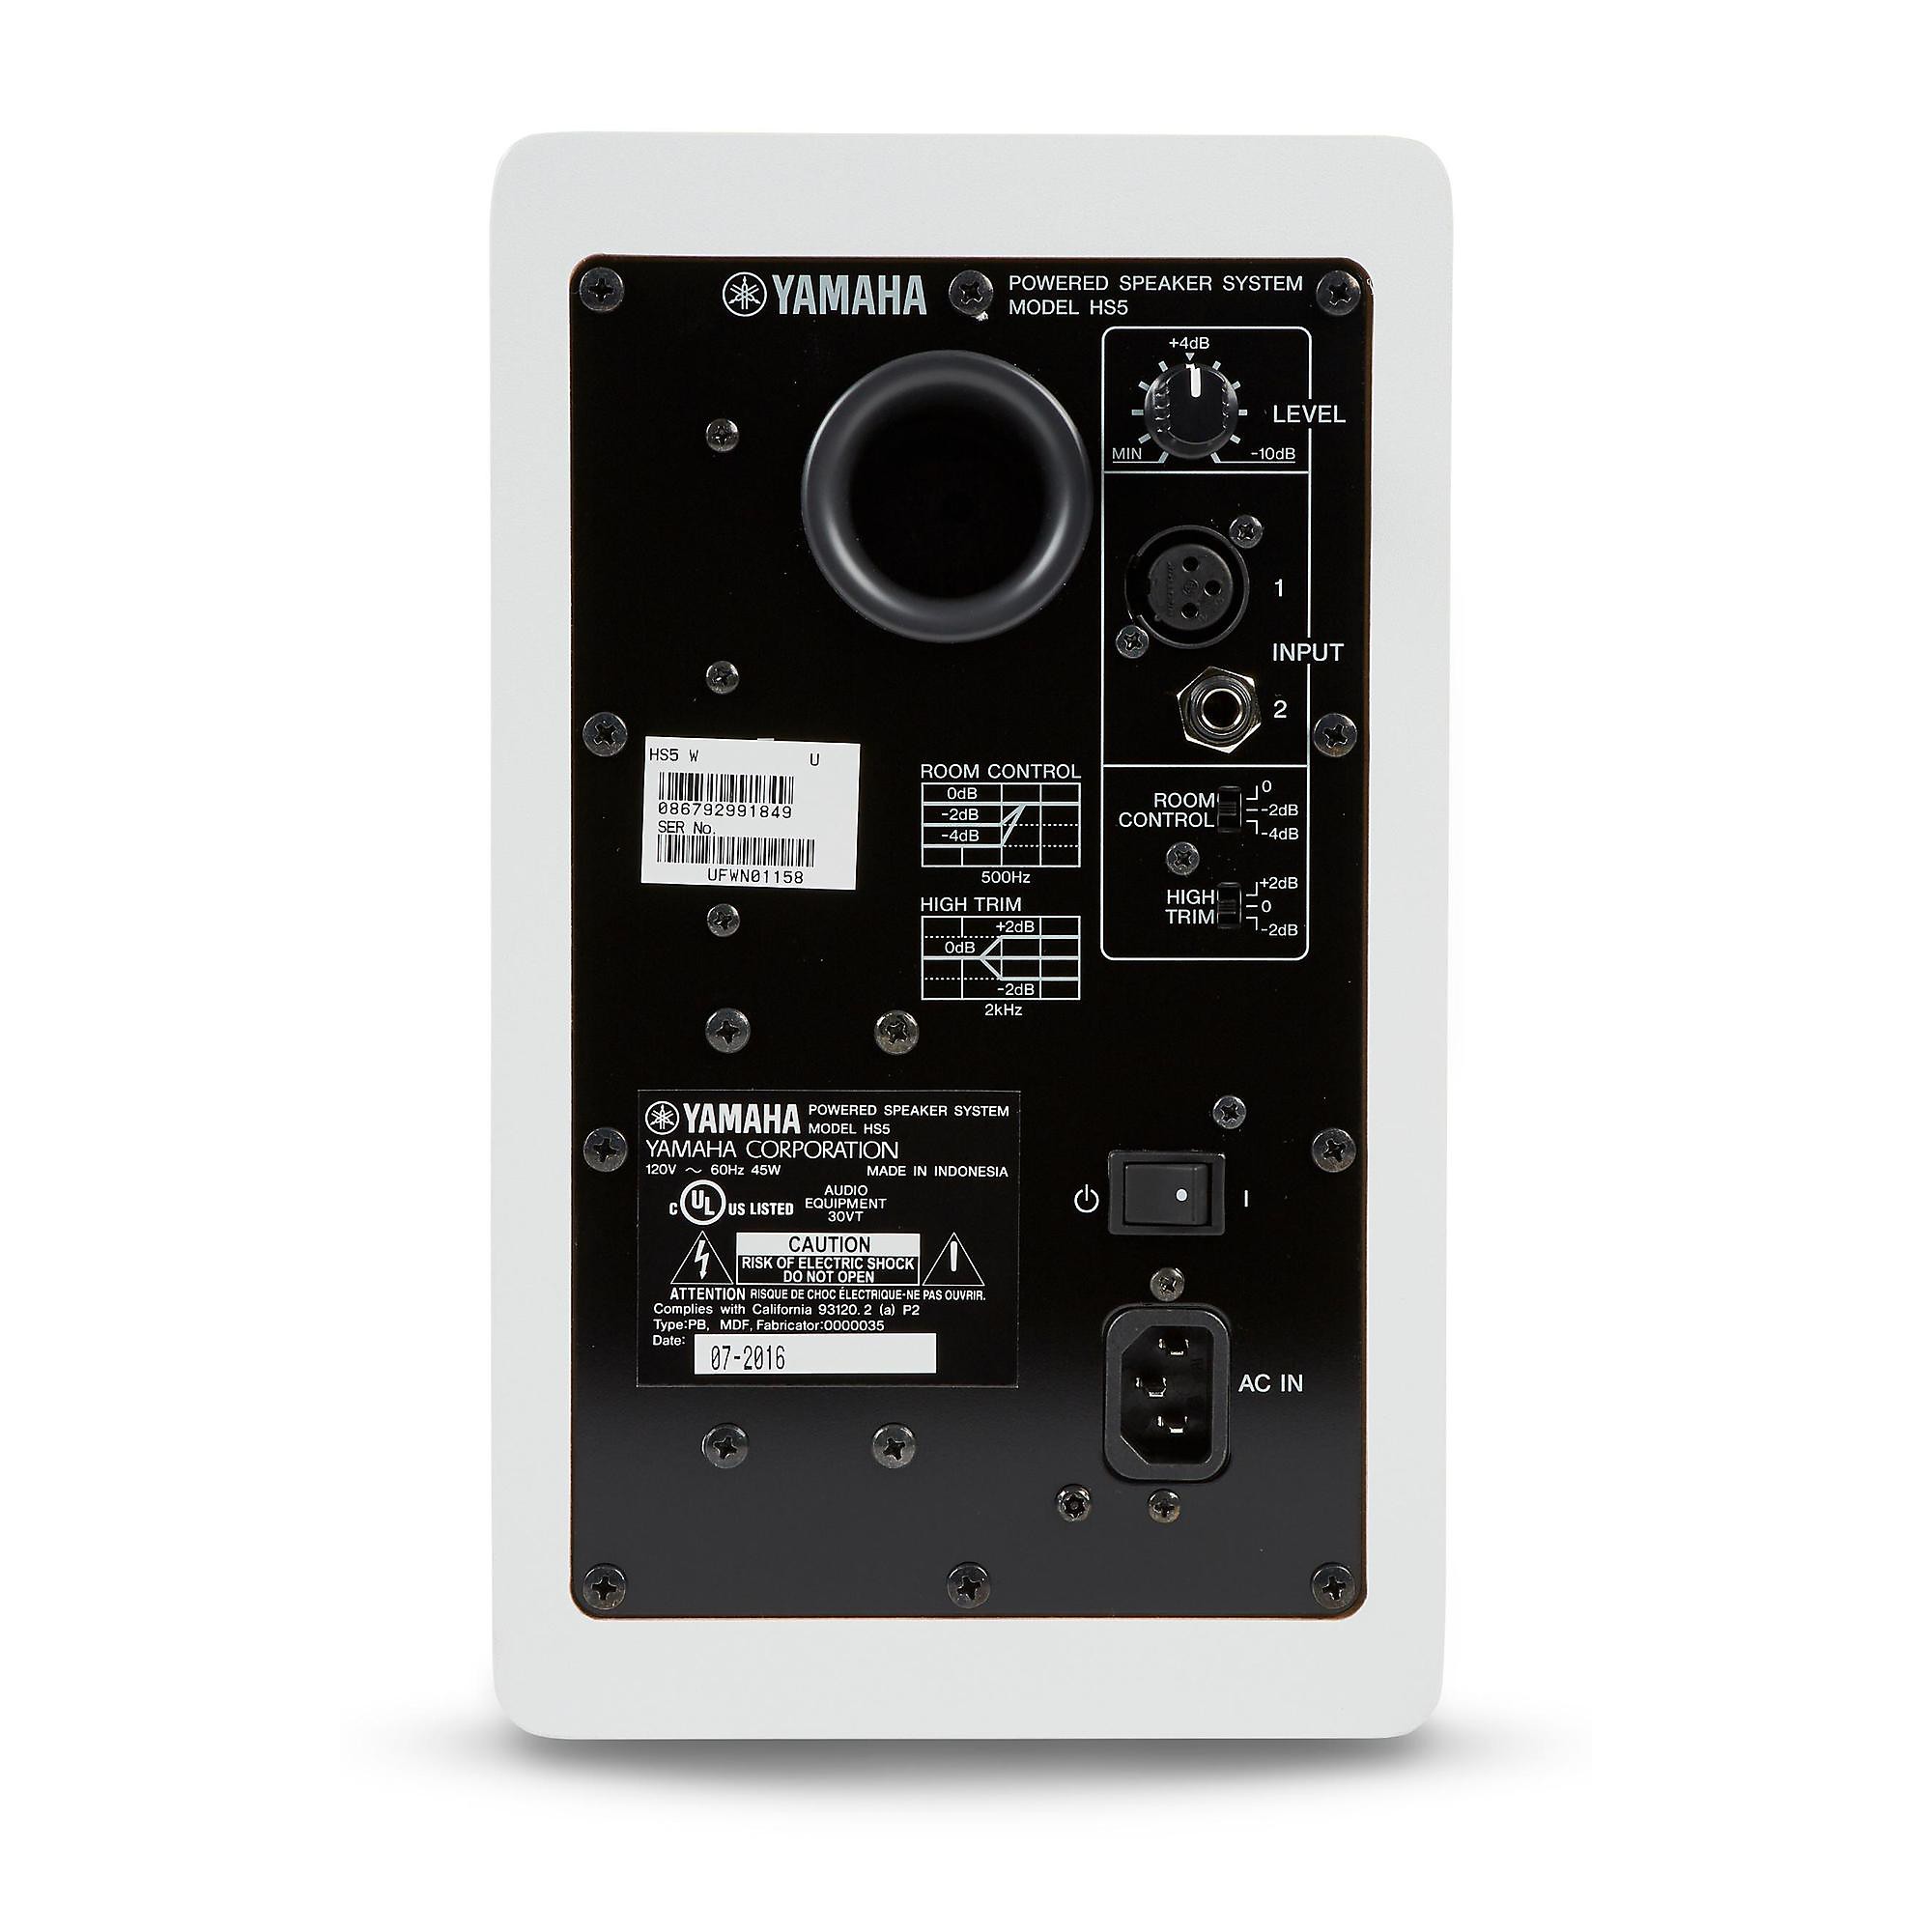 Yamaha HS5 5-inch Powered Studio Monitor